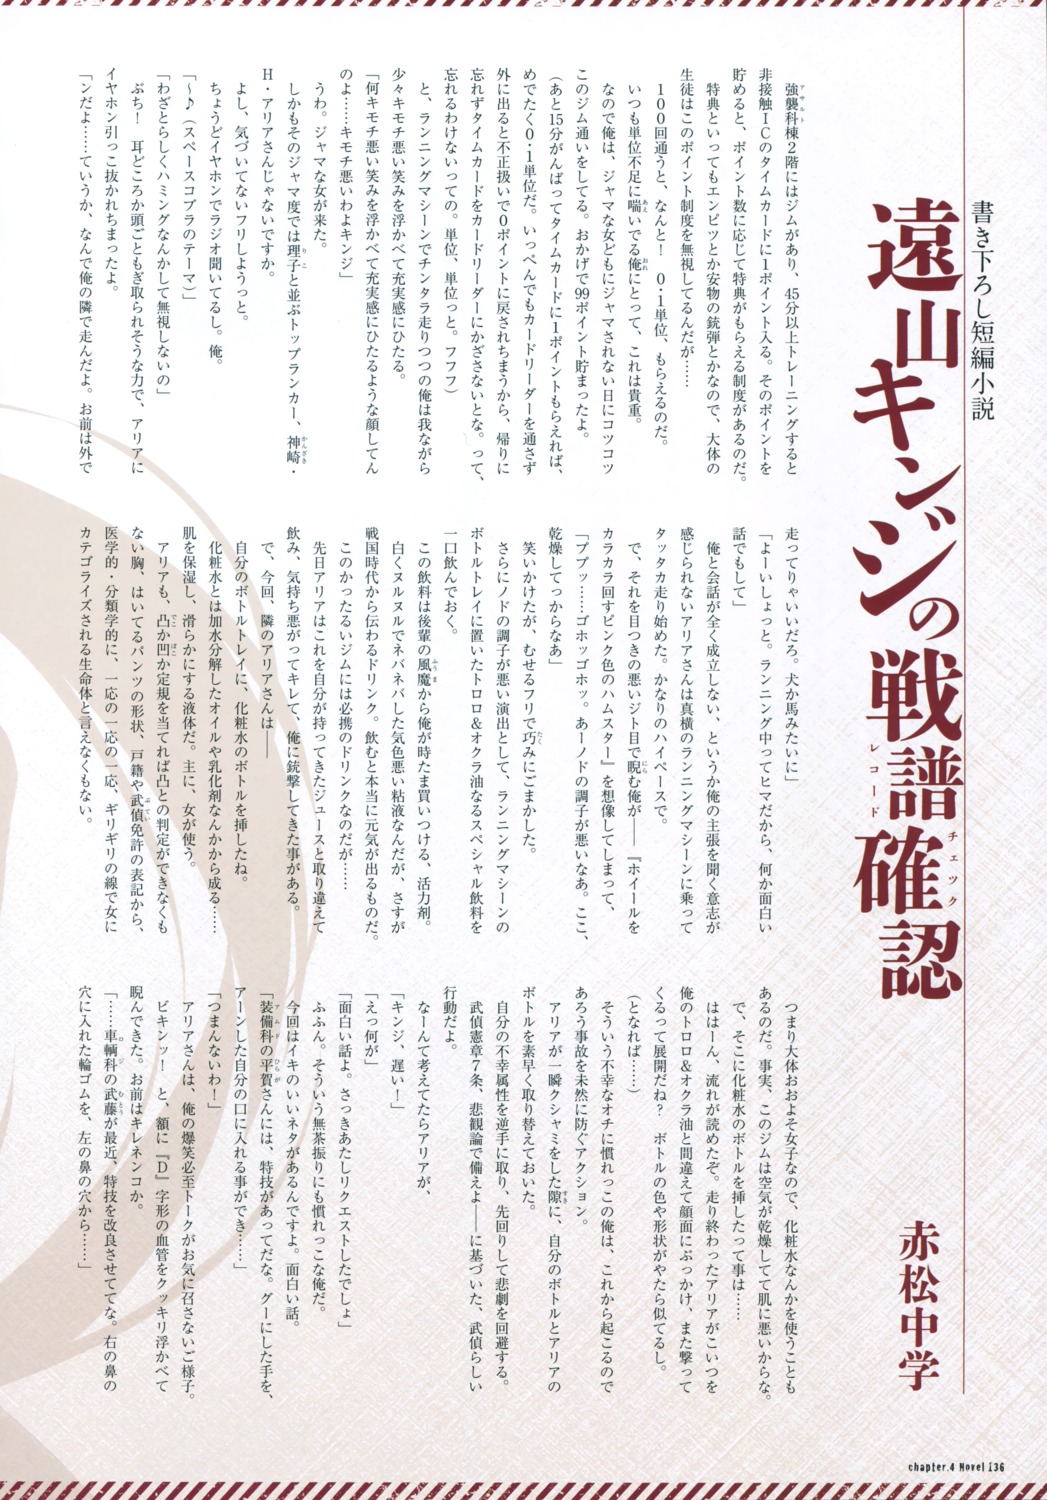 hidan_no_aria kobuichi silhouette text